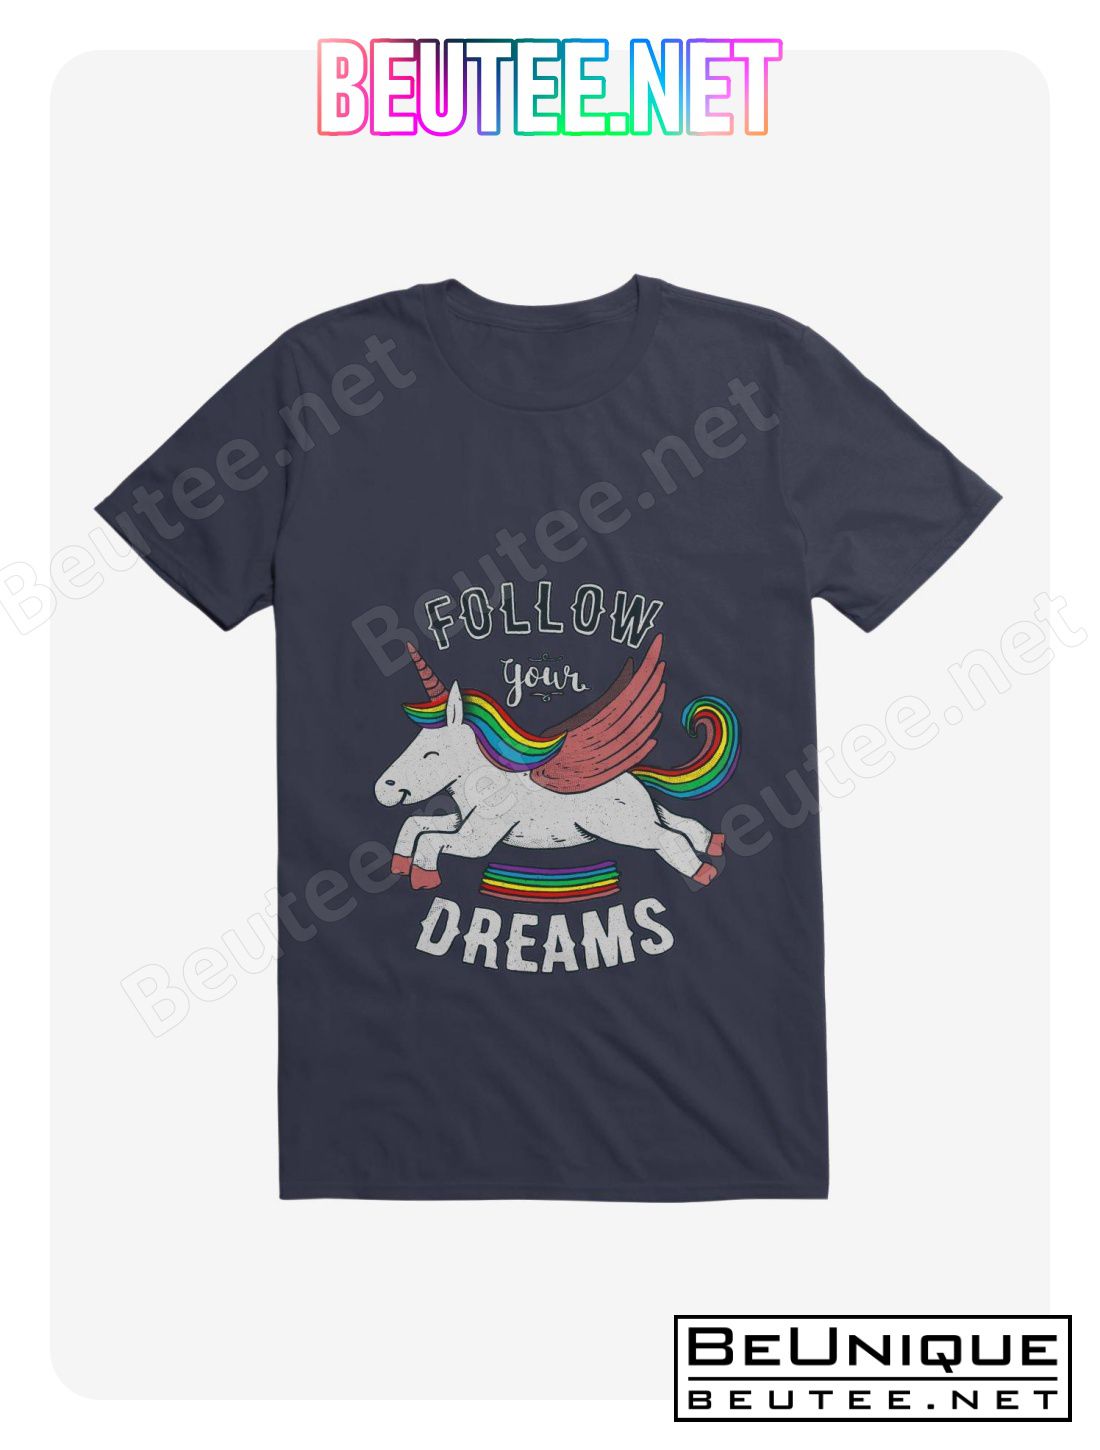 Follow Your Dreams Rainbow Unicorn T-Shirt